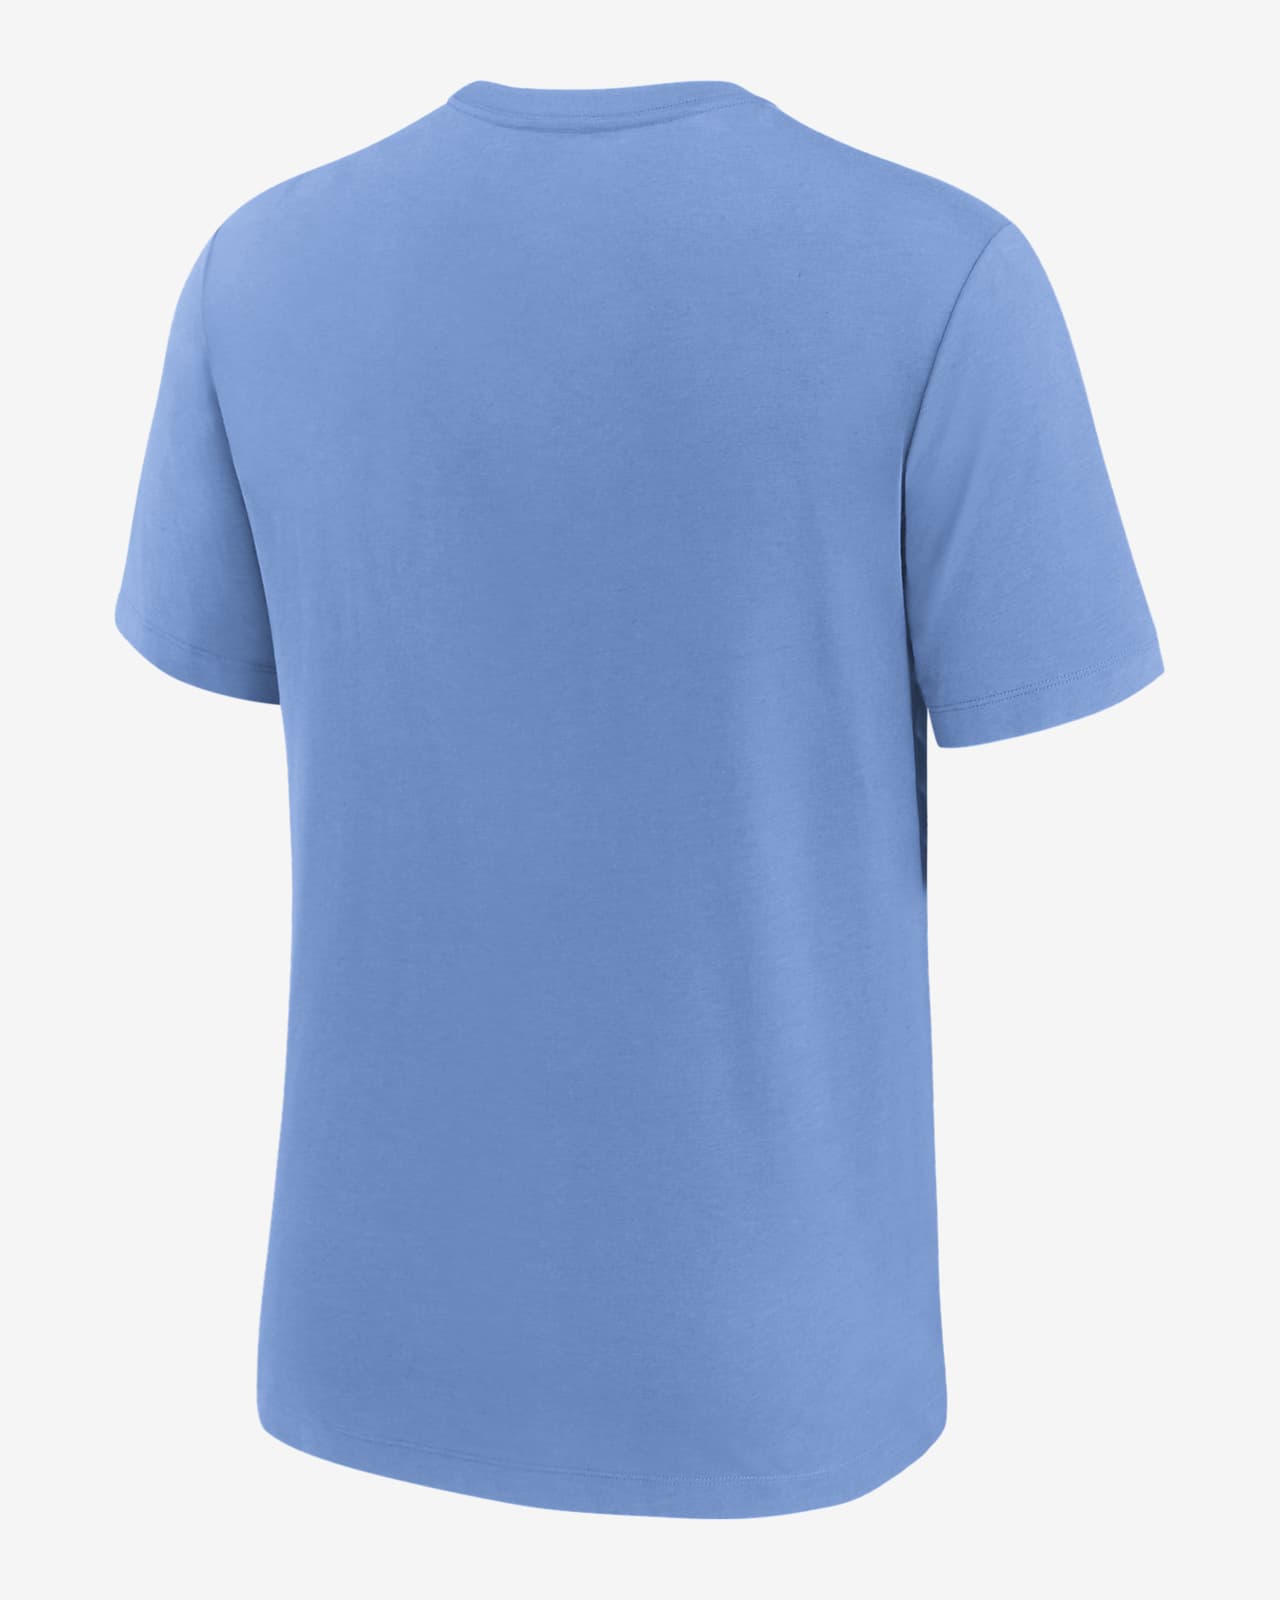 Nike Dri-FIT City Connect Logo (MLB Kansas City Royals) Men's T-Shirt